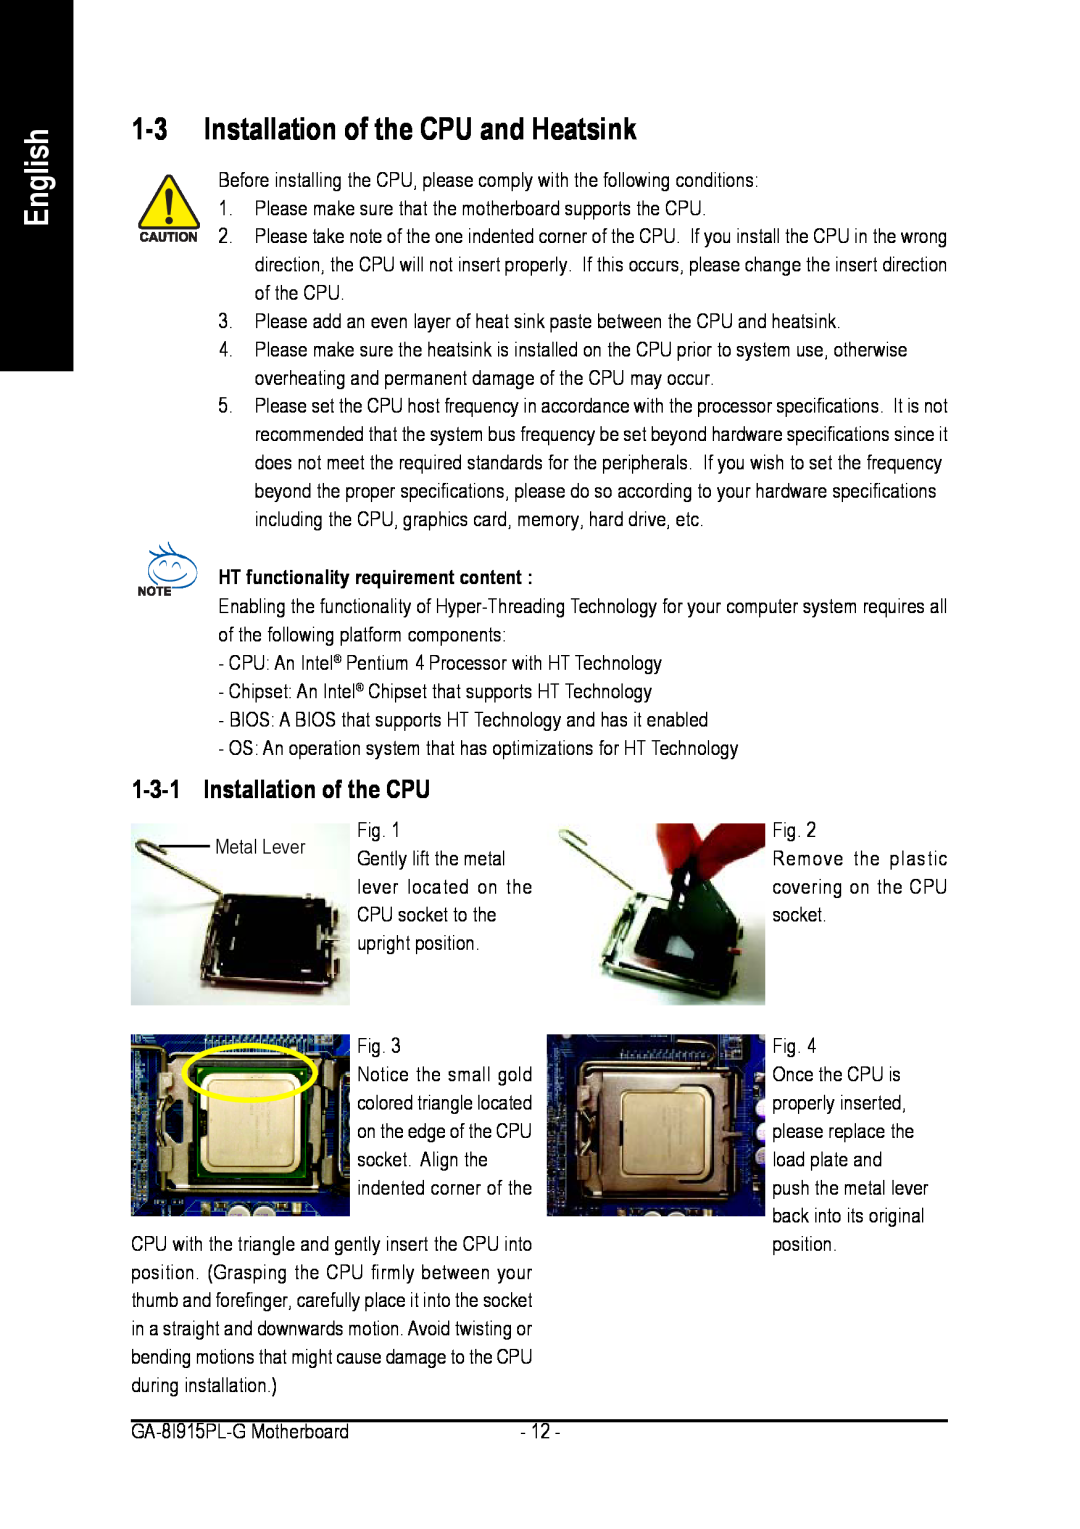 Intel GA-8I915PL-G user manual Installation of the CPU and Heatsink, English 